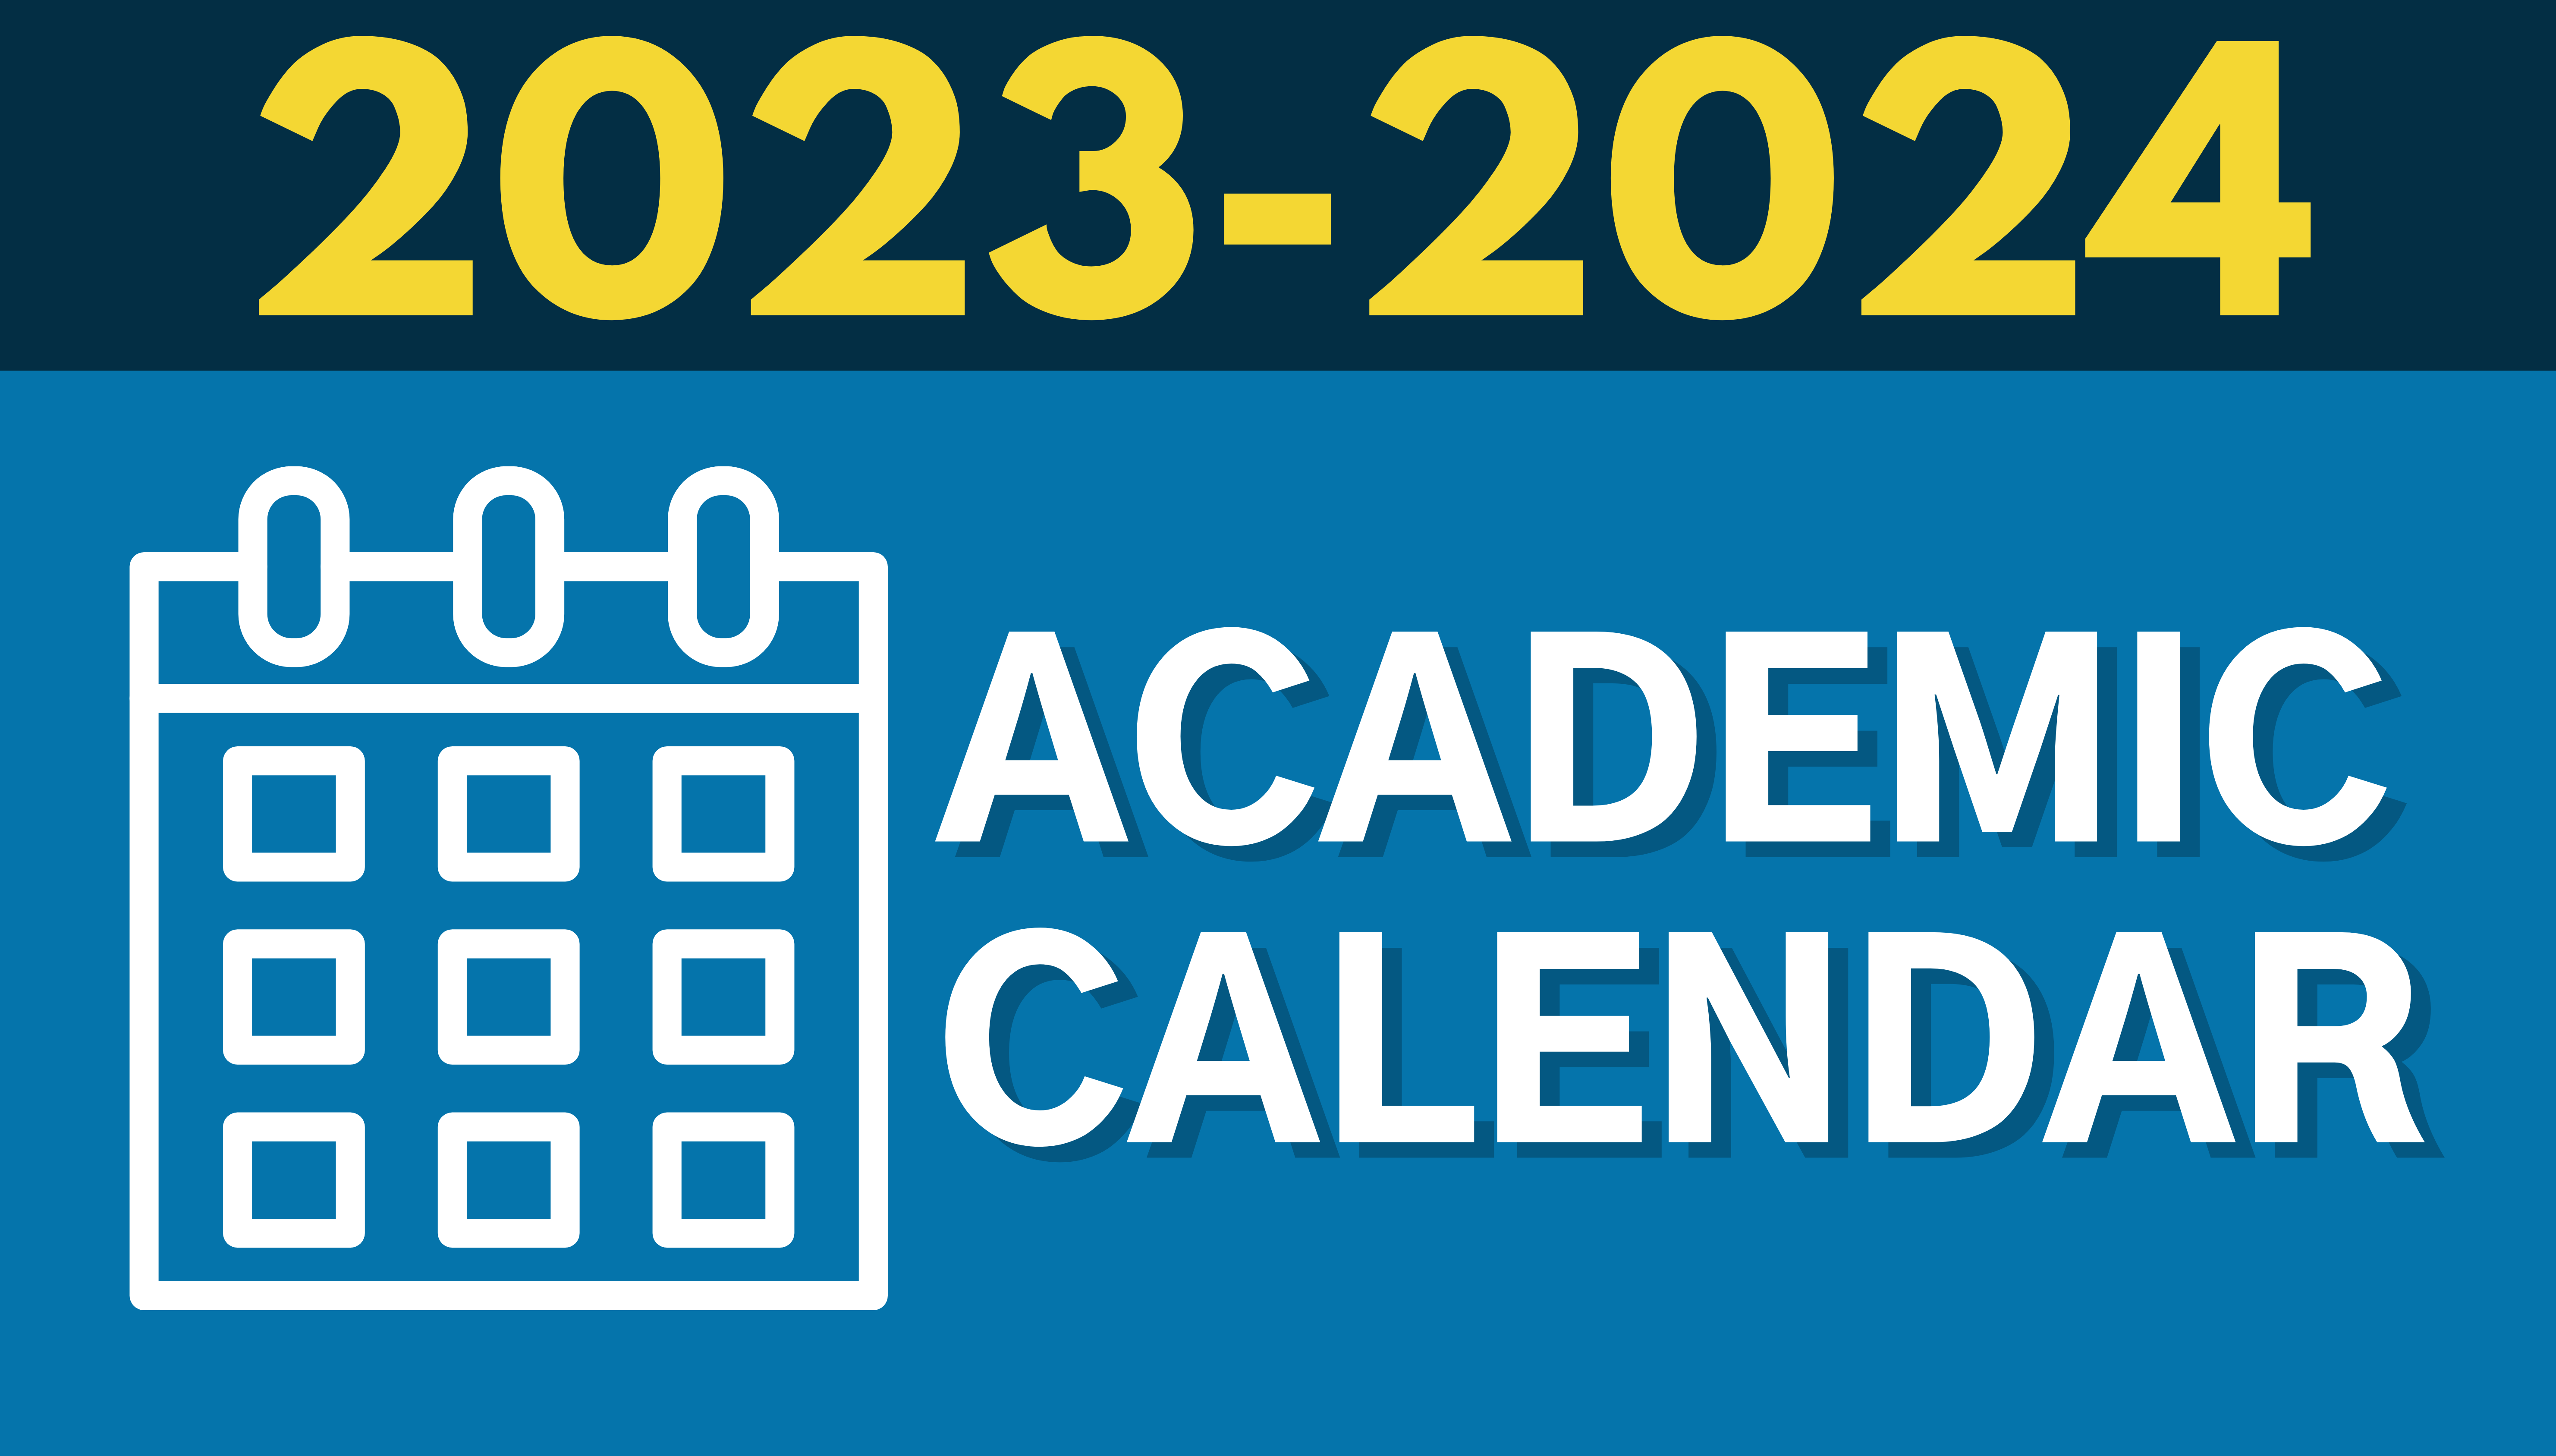 HF 2023 2024 Academic Calendar 